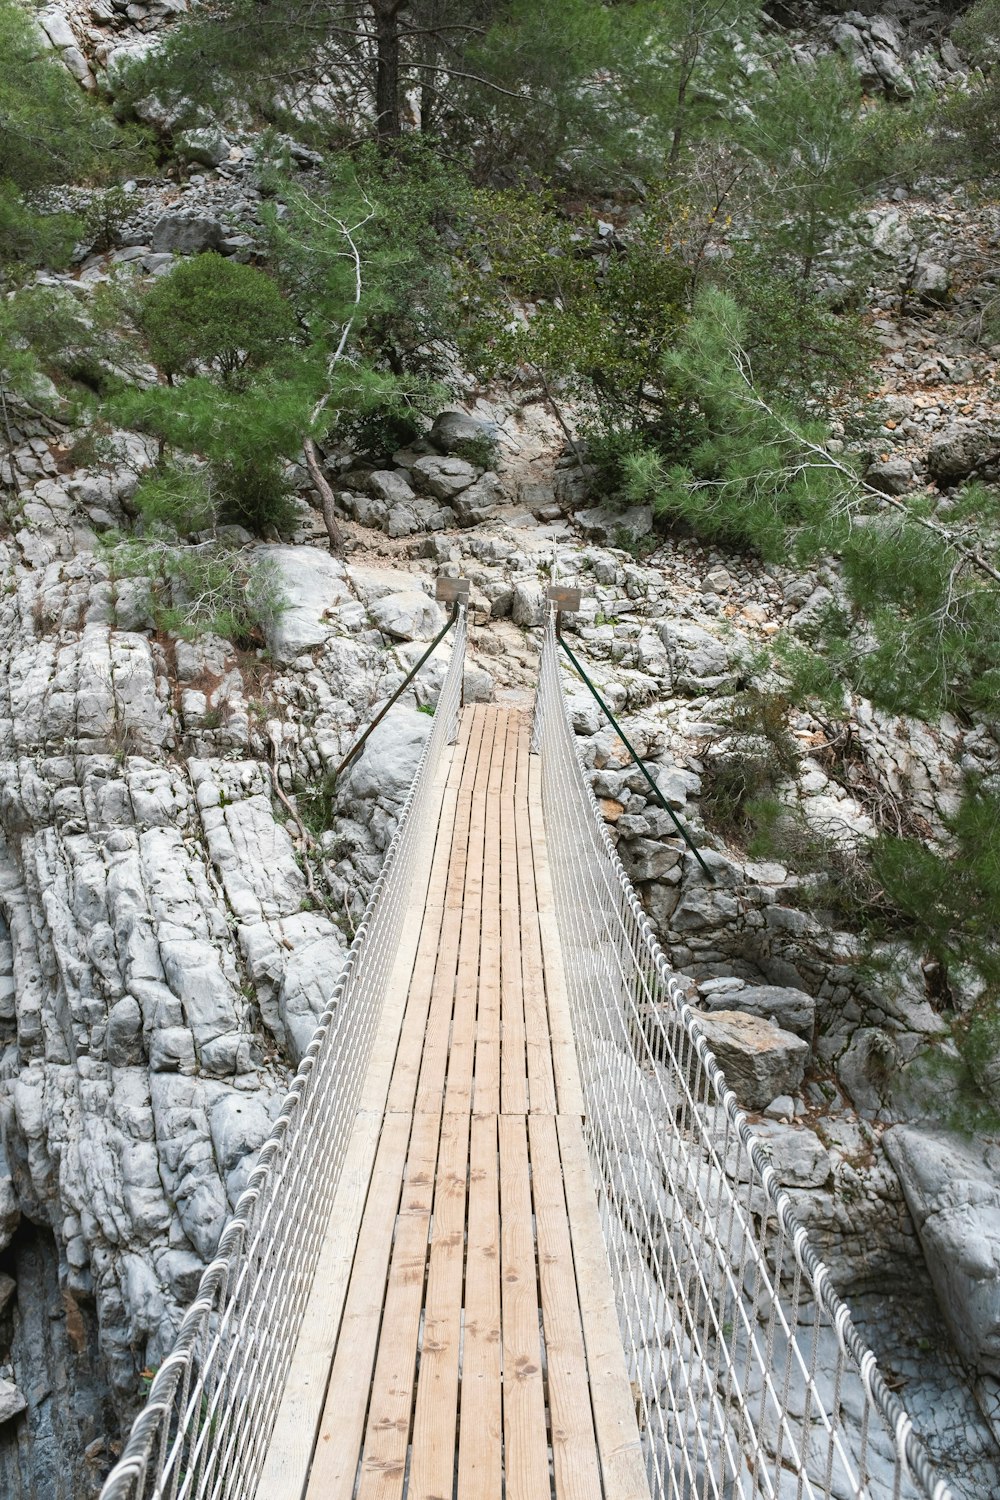 a wooden suspension bridge over a rocky river